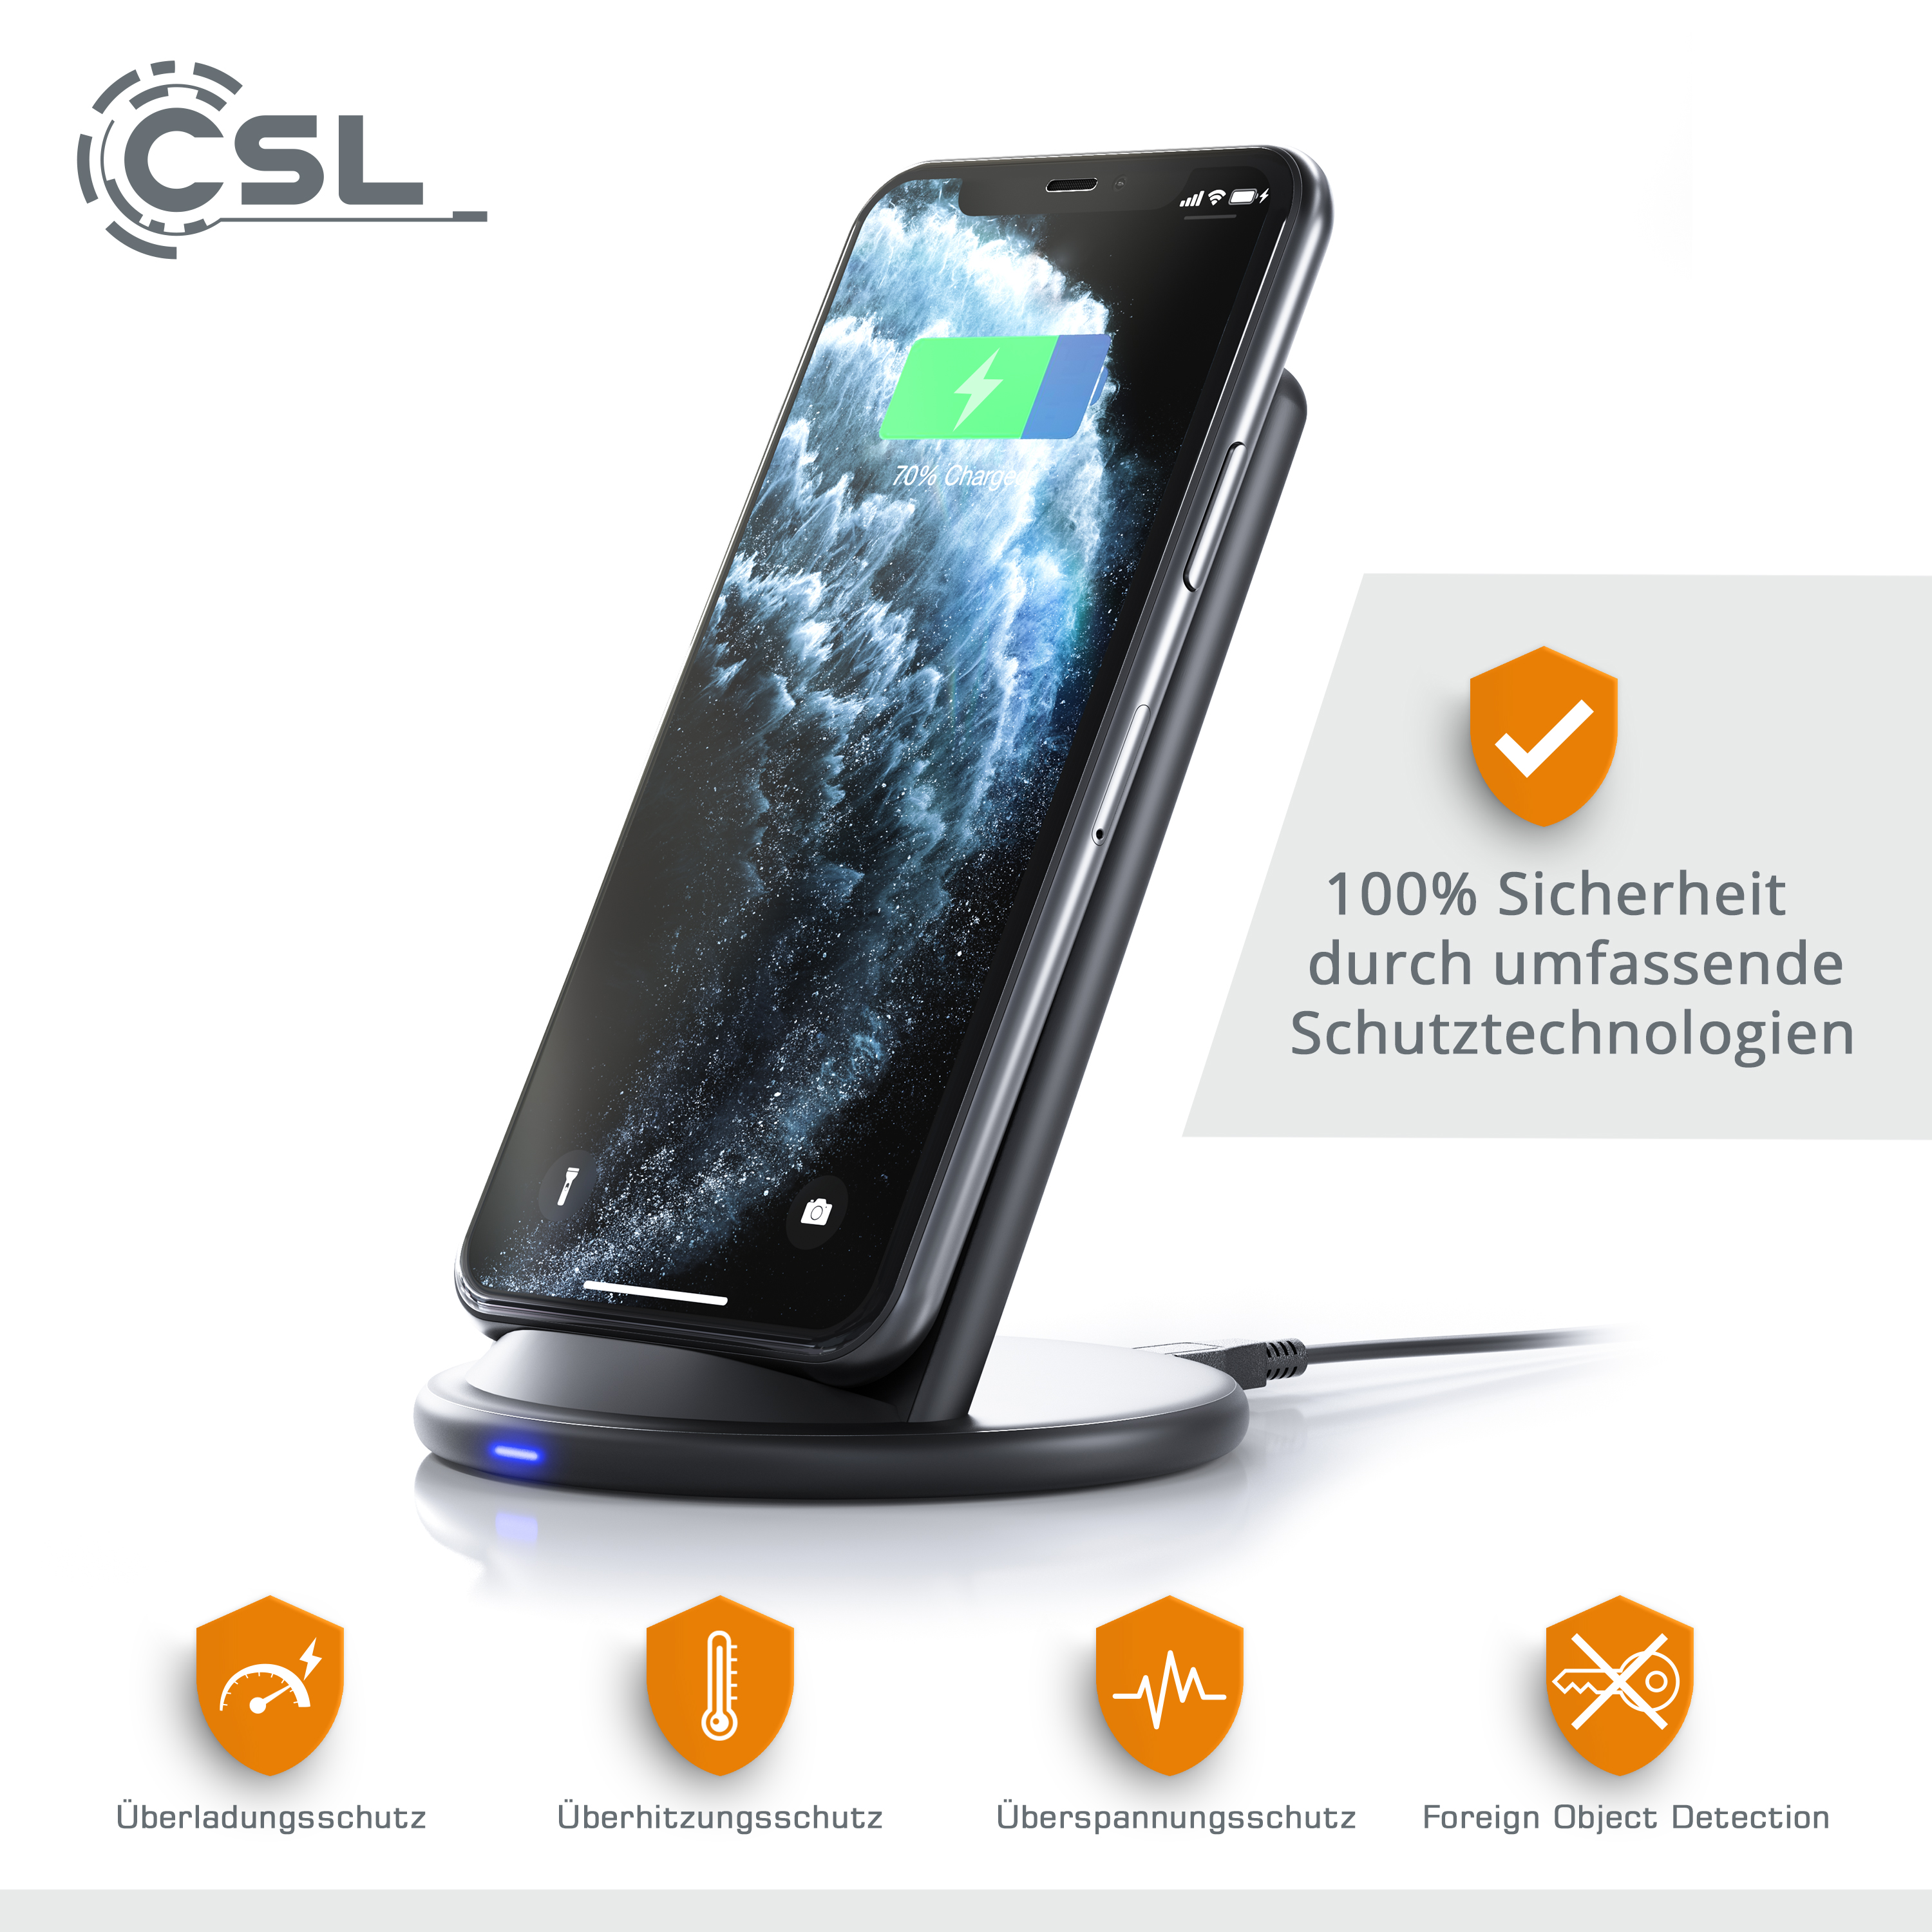 CSL Qi Universal, silber-schwarz Stand Wireless Charger Ladegerät